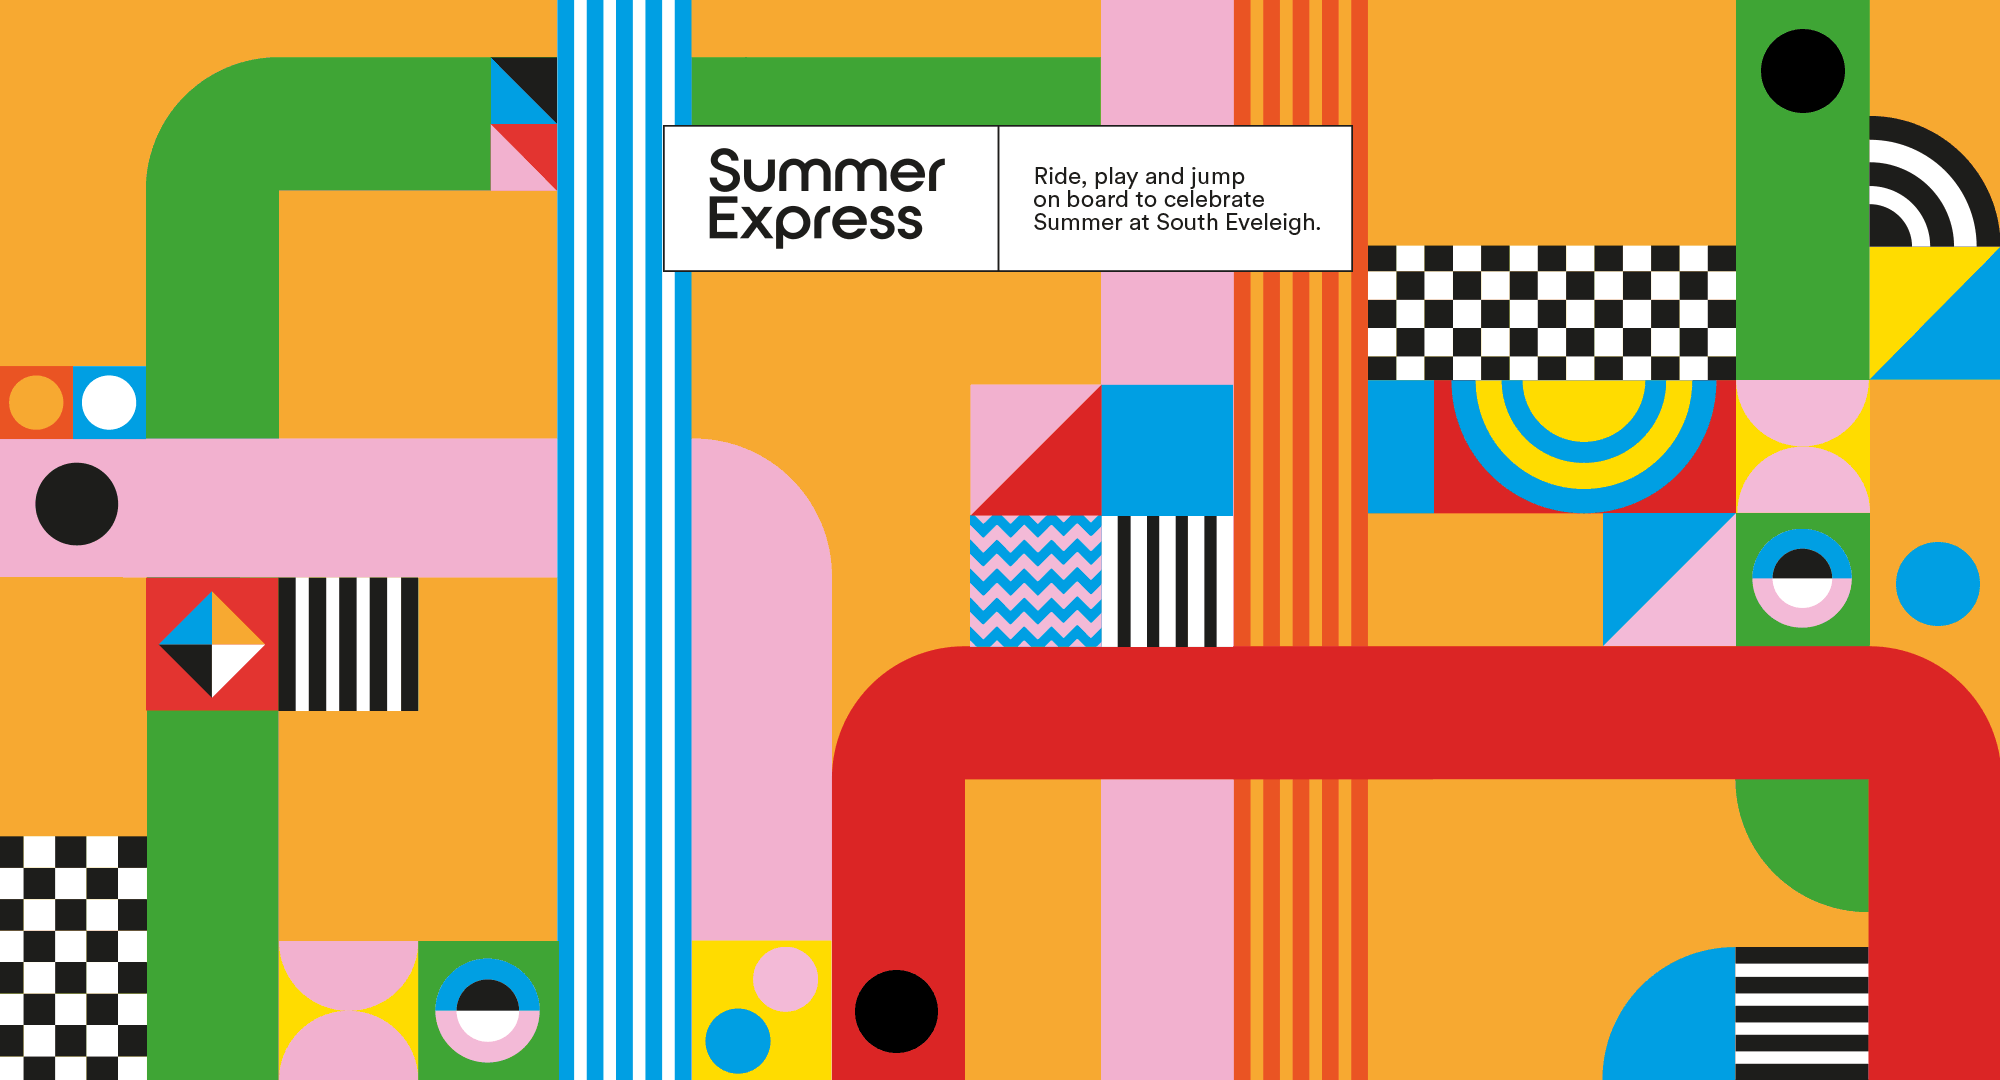 Summer Express at South Eveleigh